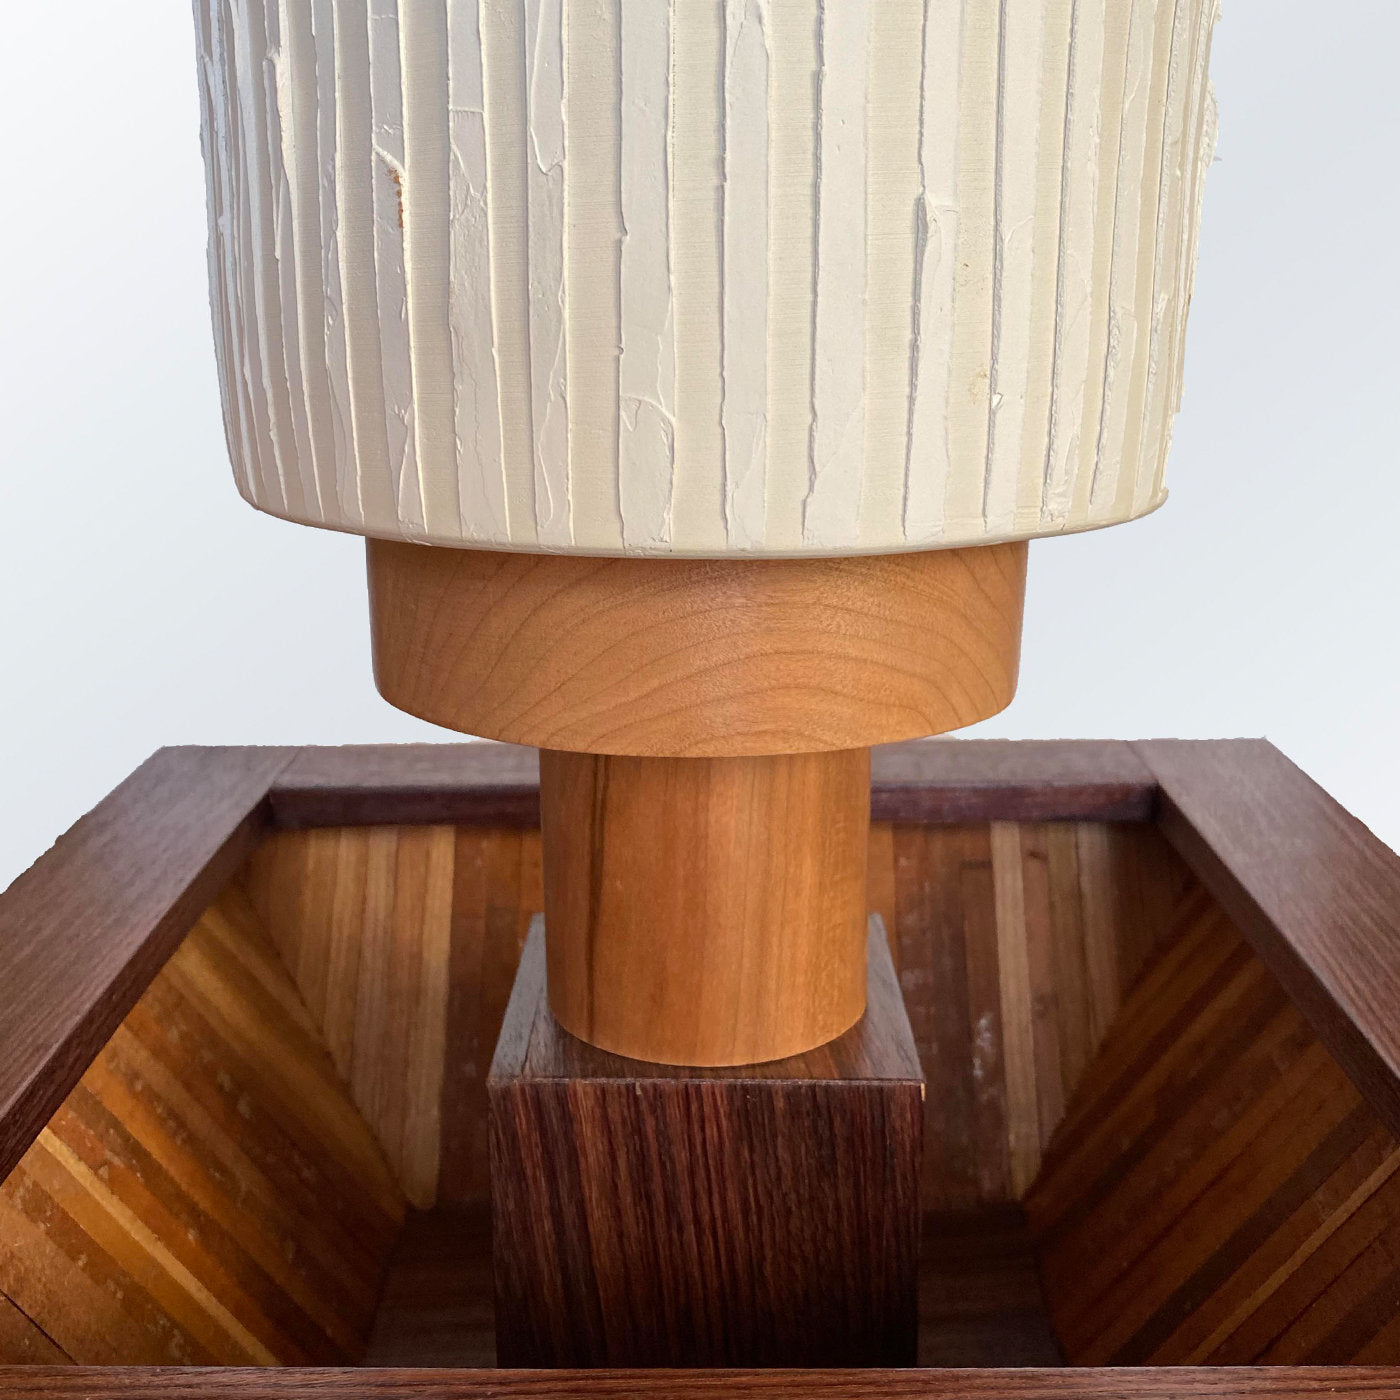 Totem Table Lamp by Mascia Meccani #10 - Alternative view 4